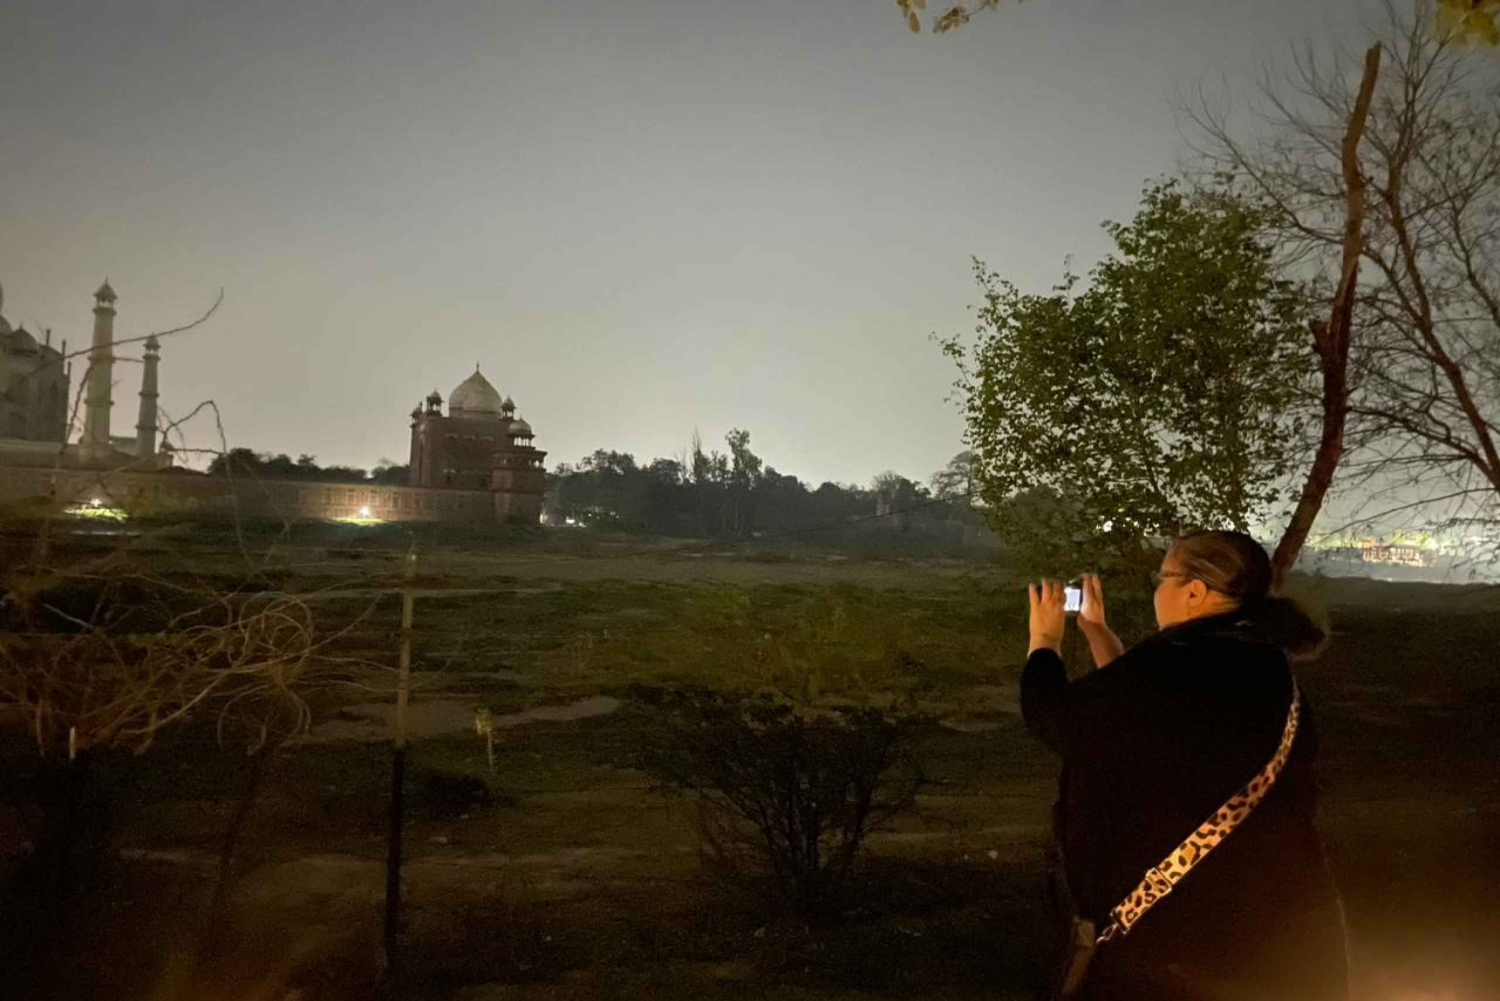 Agra: 2-Day Agra City & Taj Mahal Tour with Accommodation